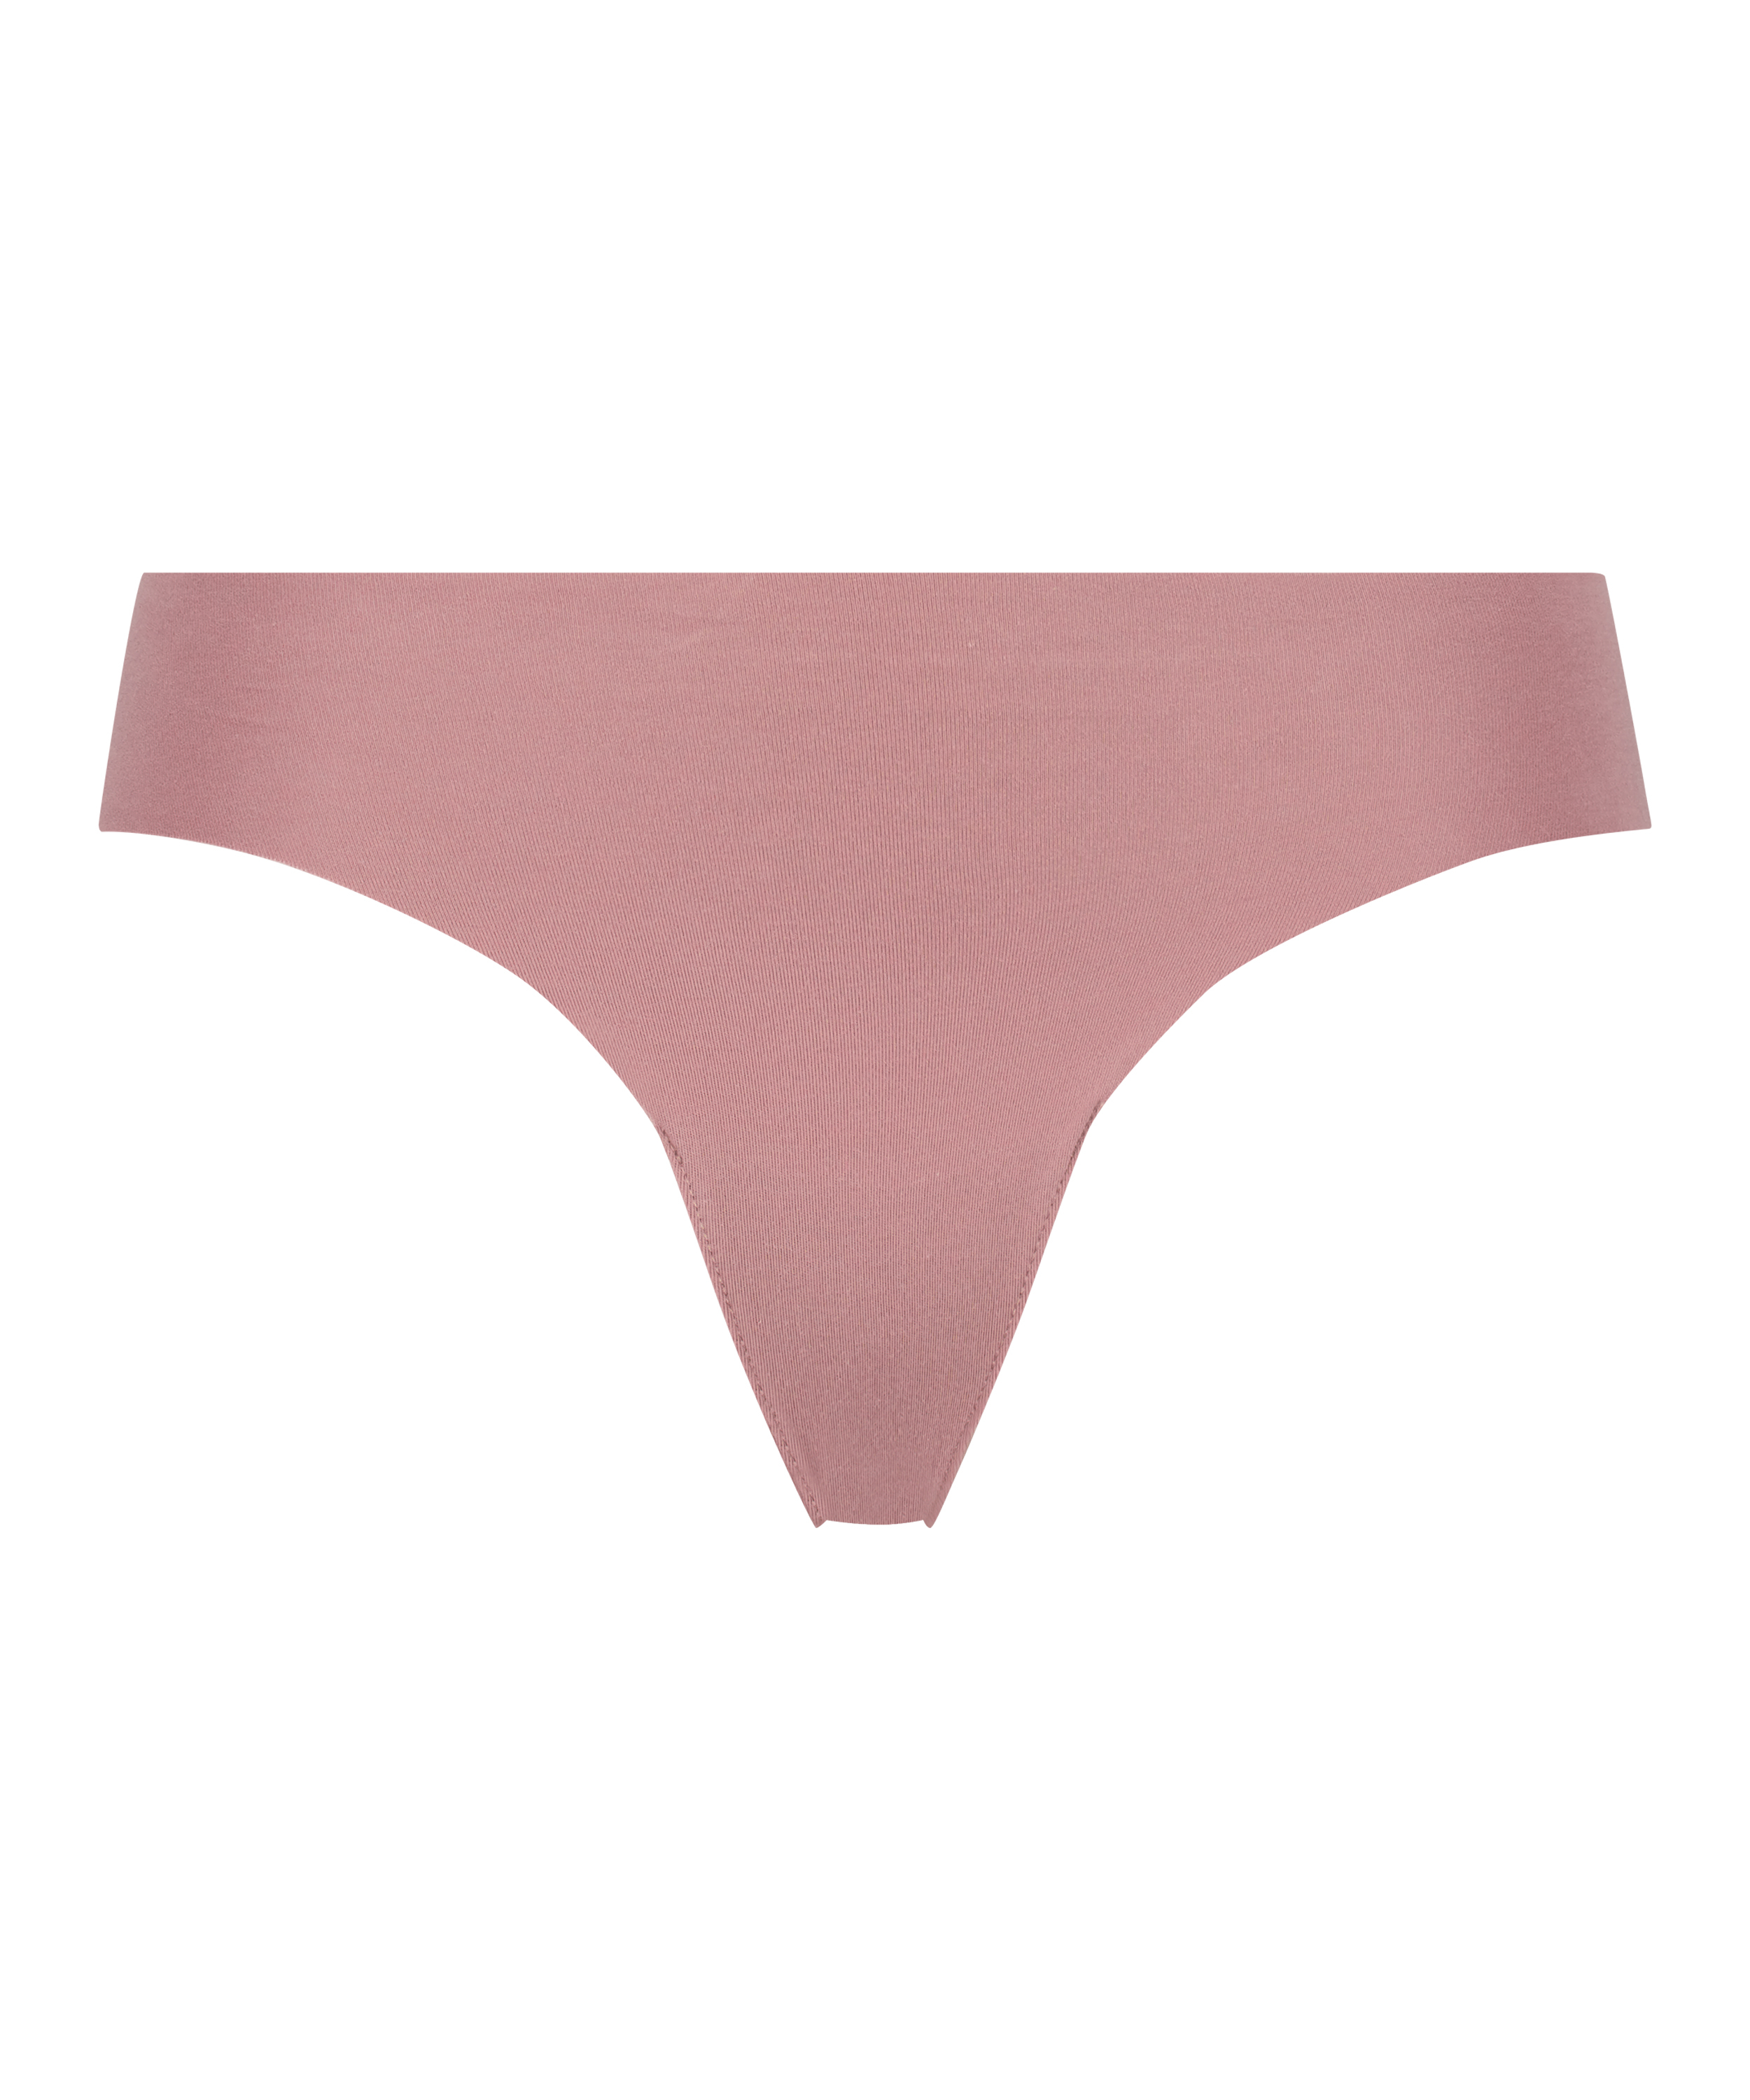 Invisible cotton thong, Pink, main